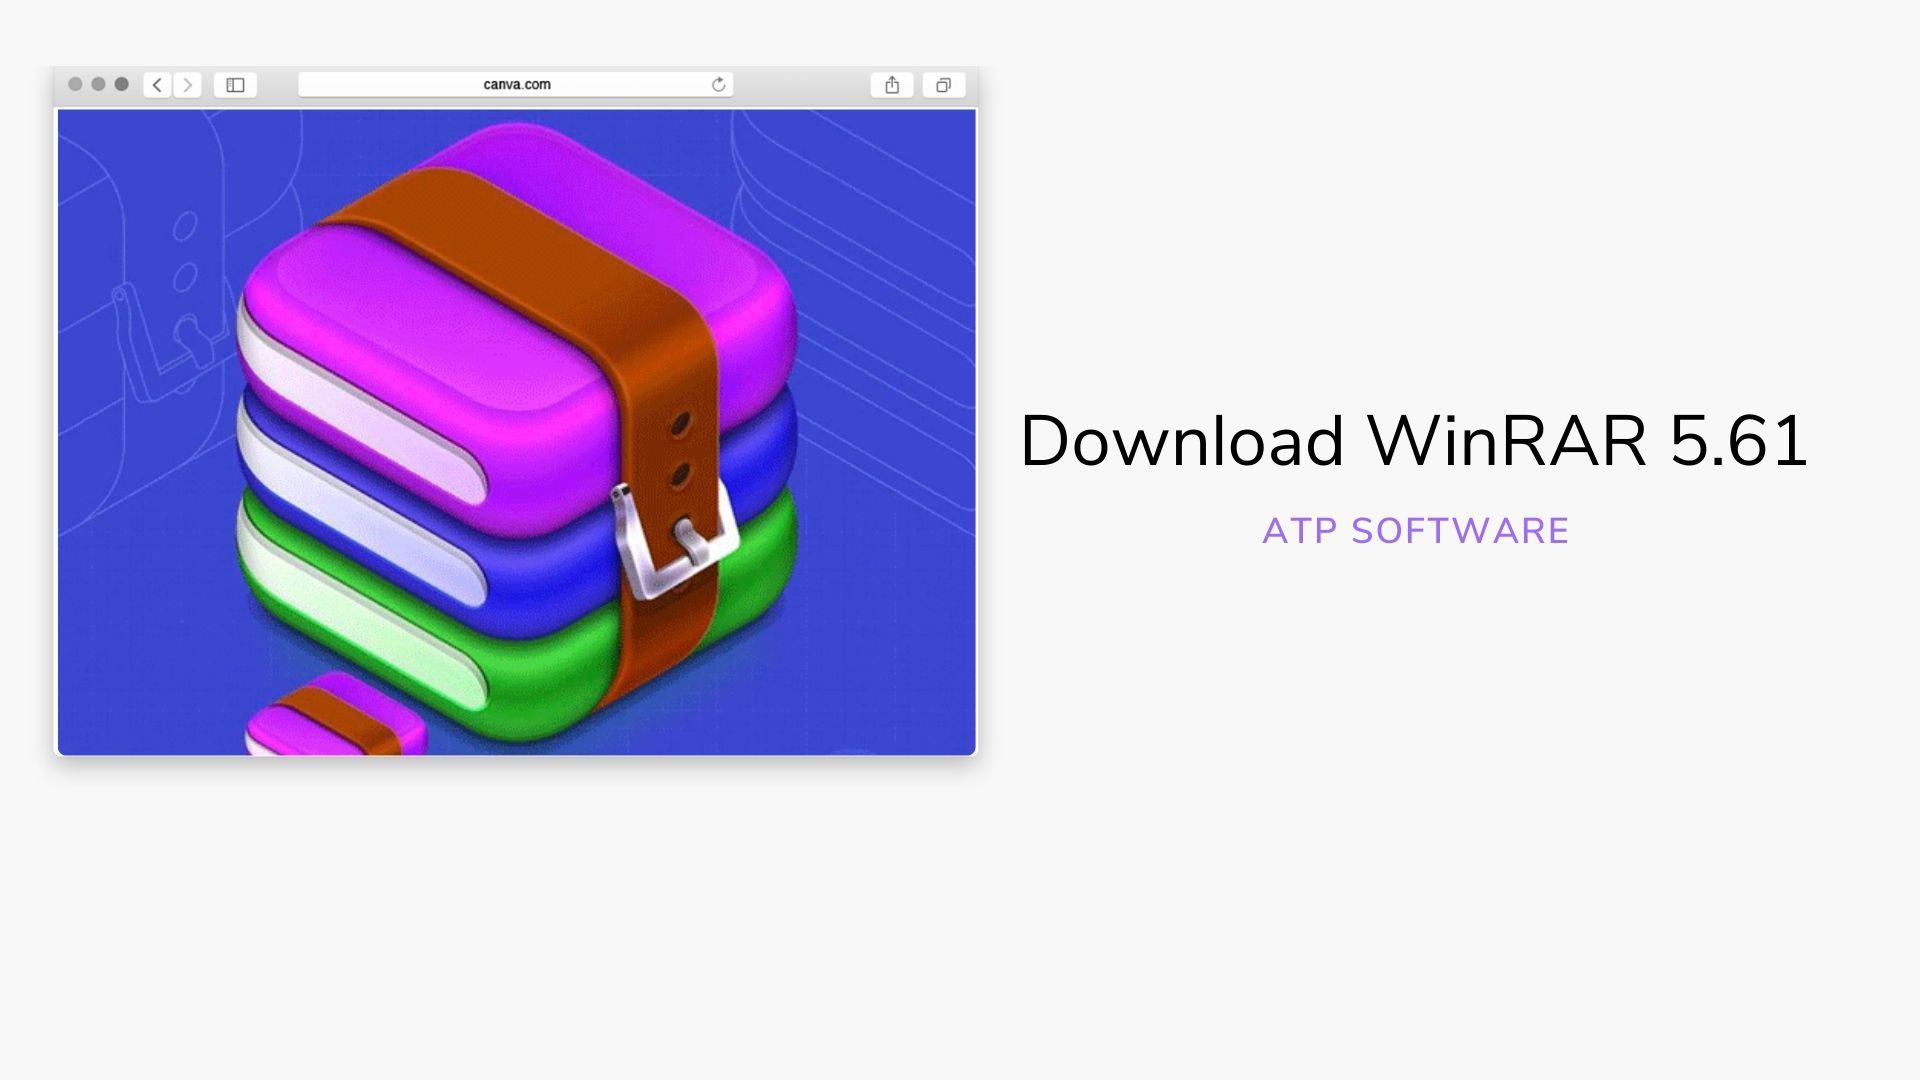 Download WinRAR 5.61